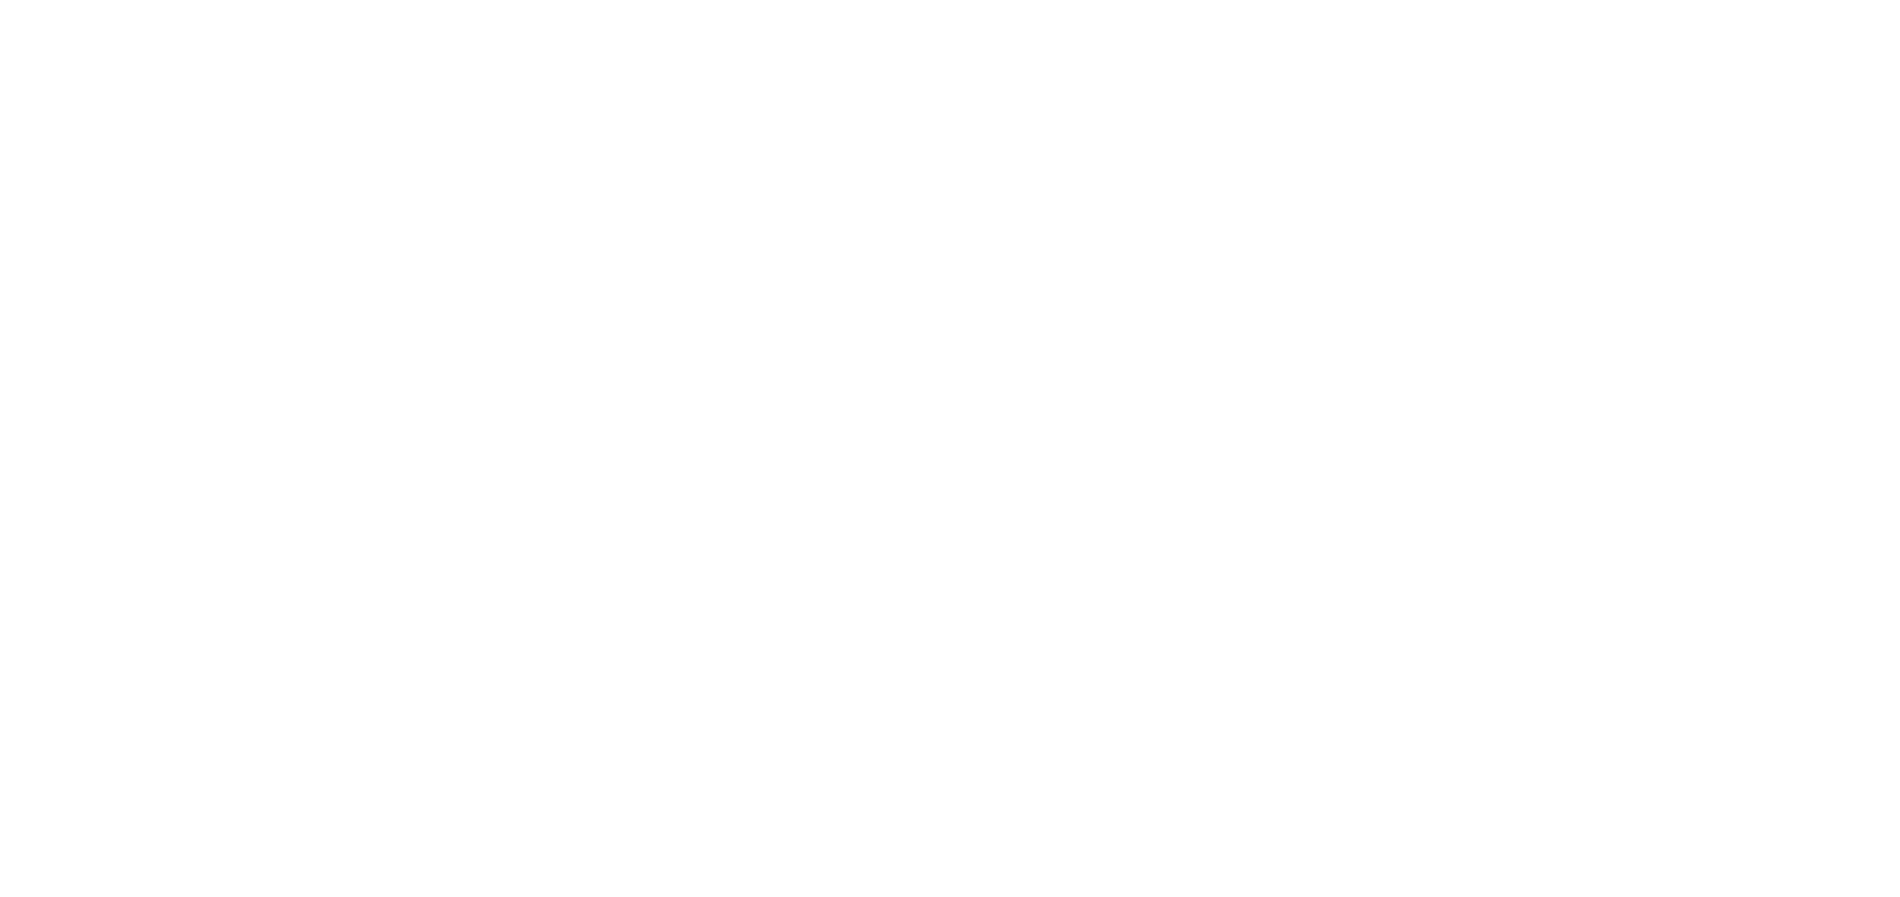 Gargoyle Tattoo Auckland